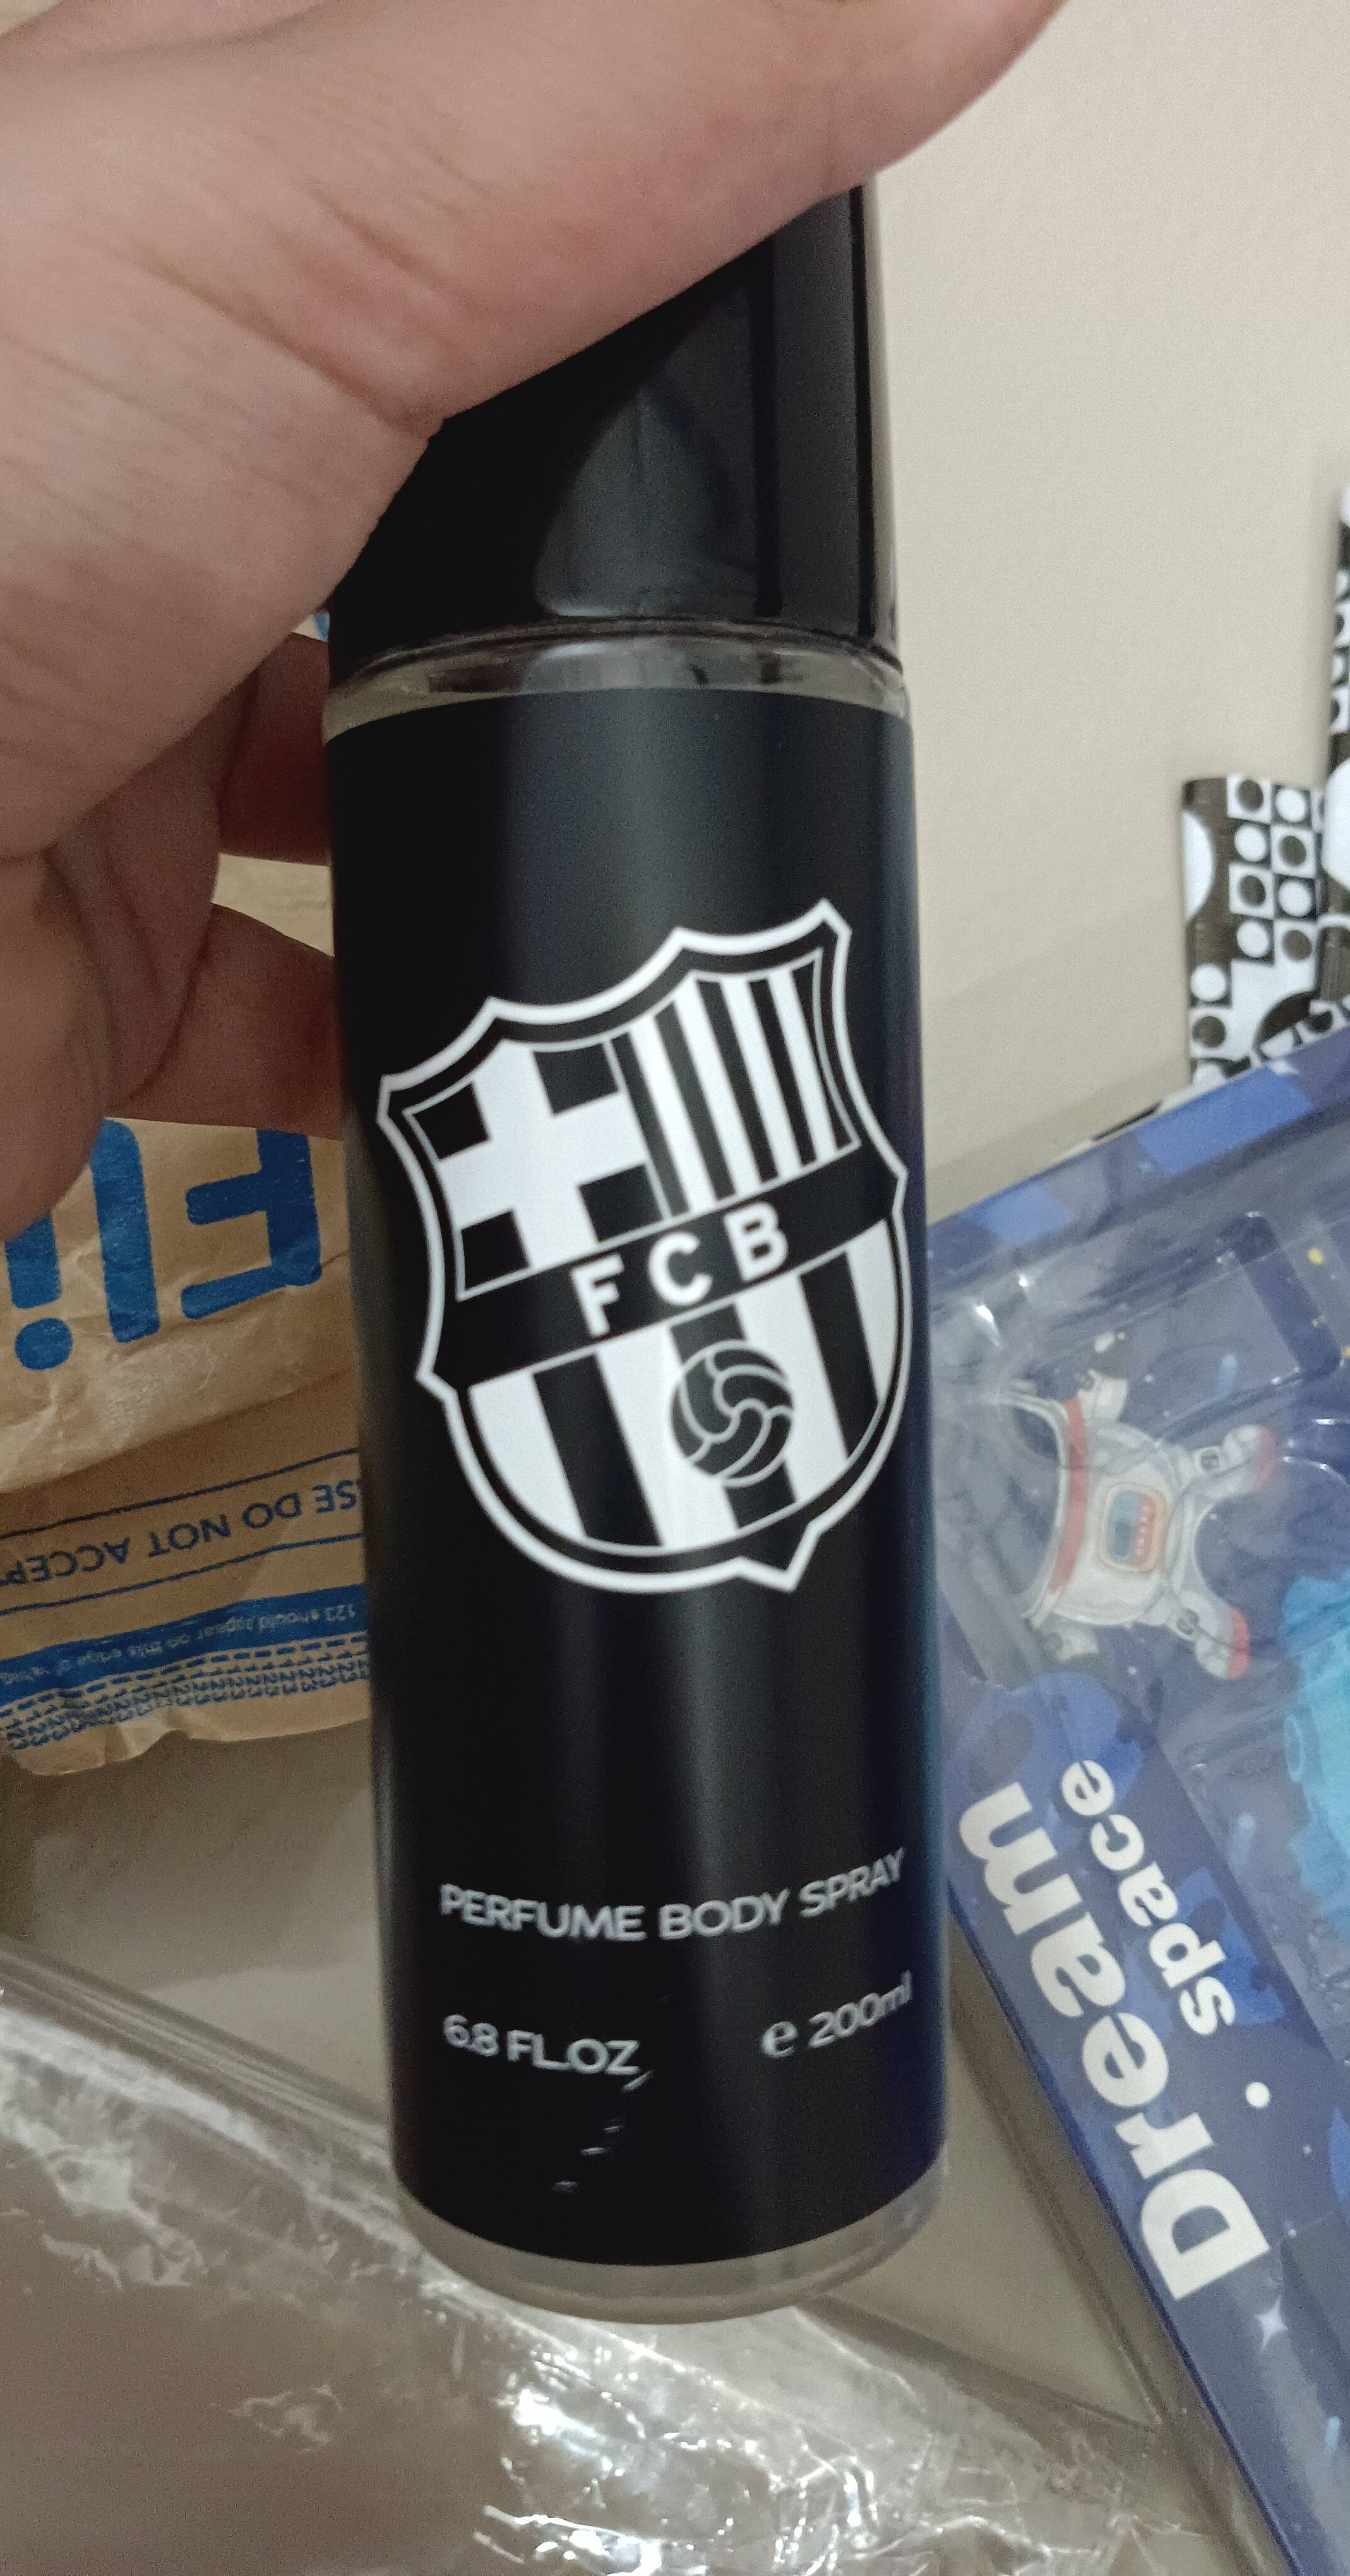 FCB perfume body spray - Produkt - en